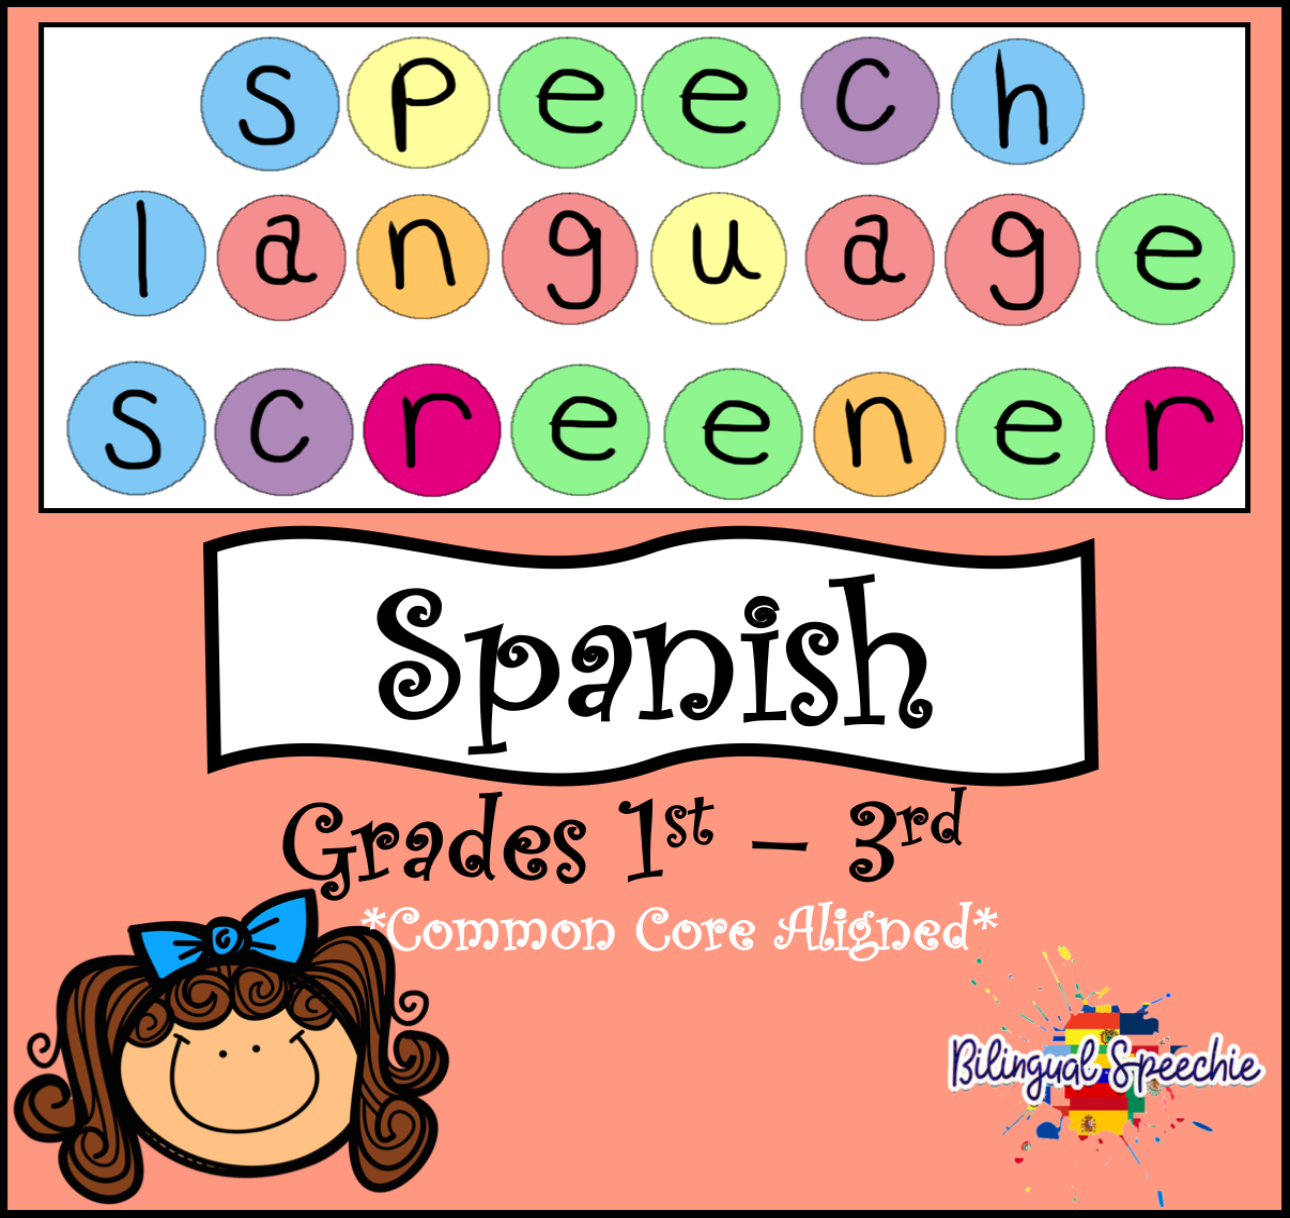 speech-language-screener-spanish-grades-1st-3rd-bilingual-speechie